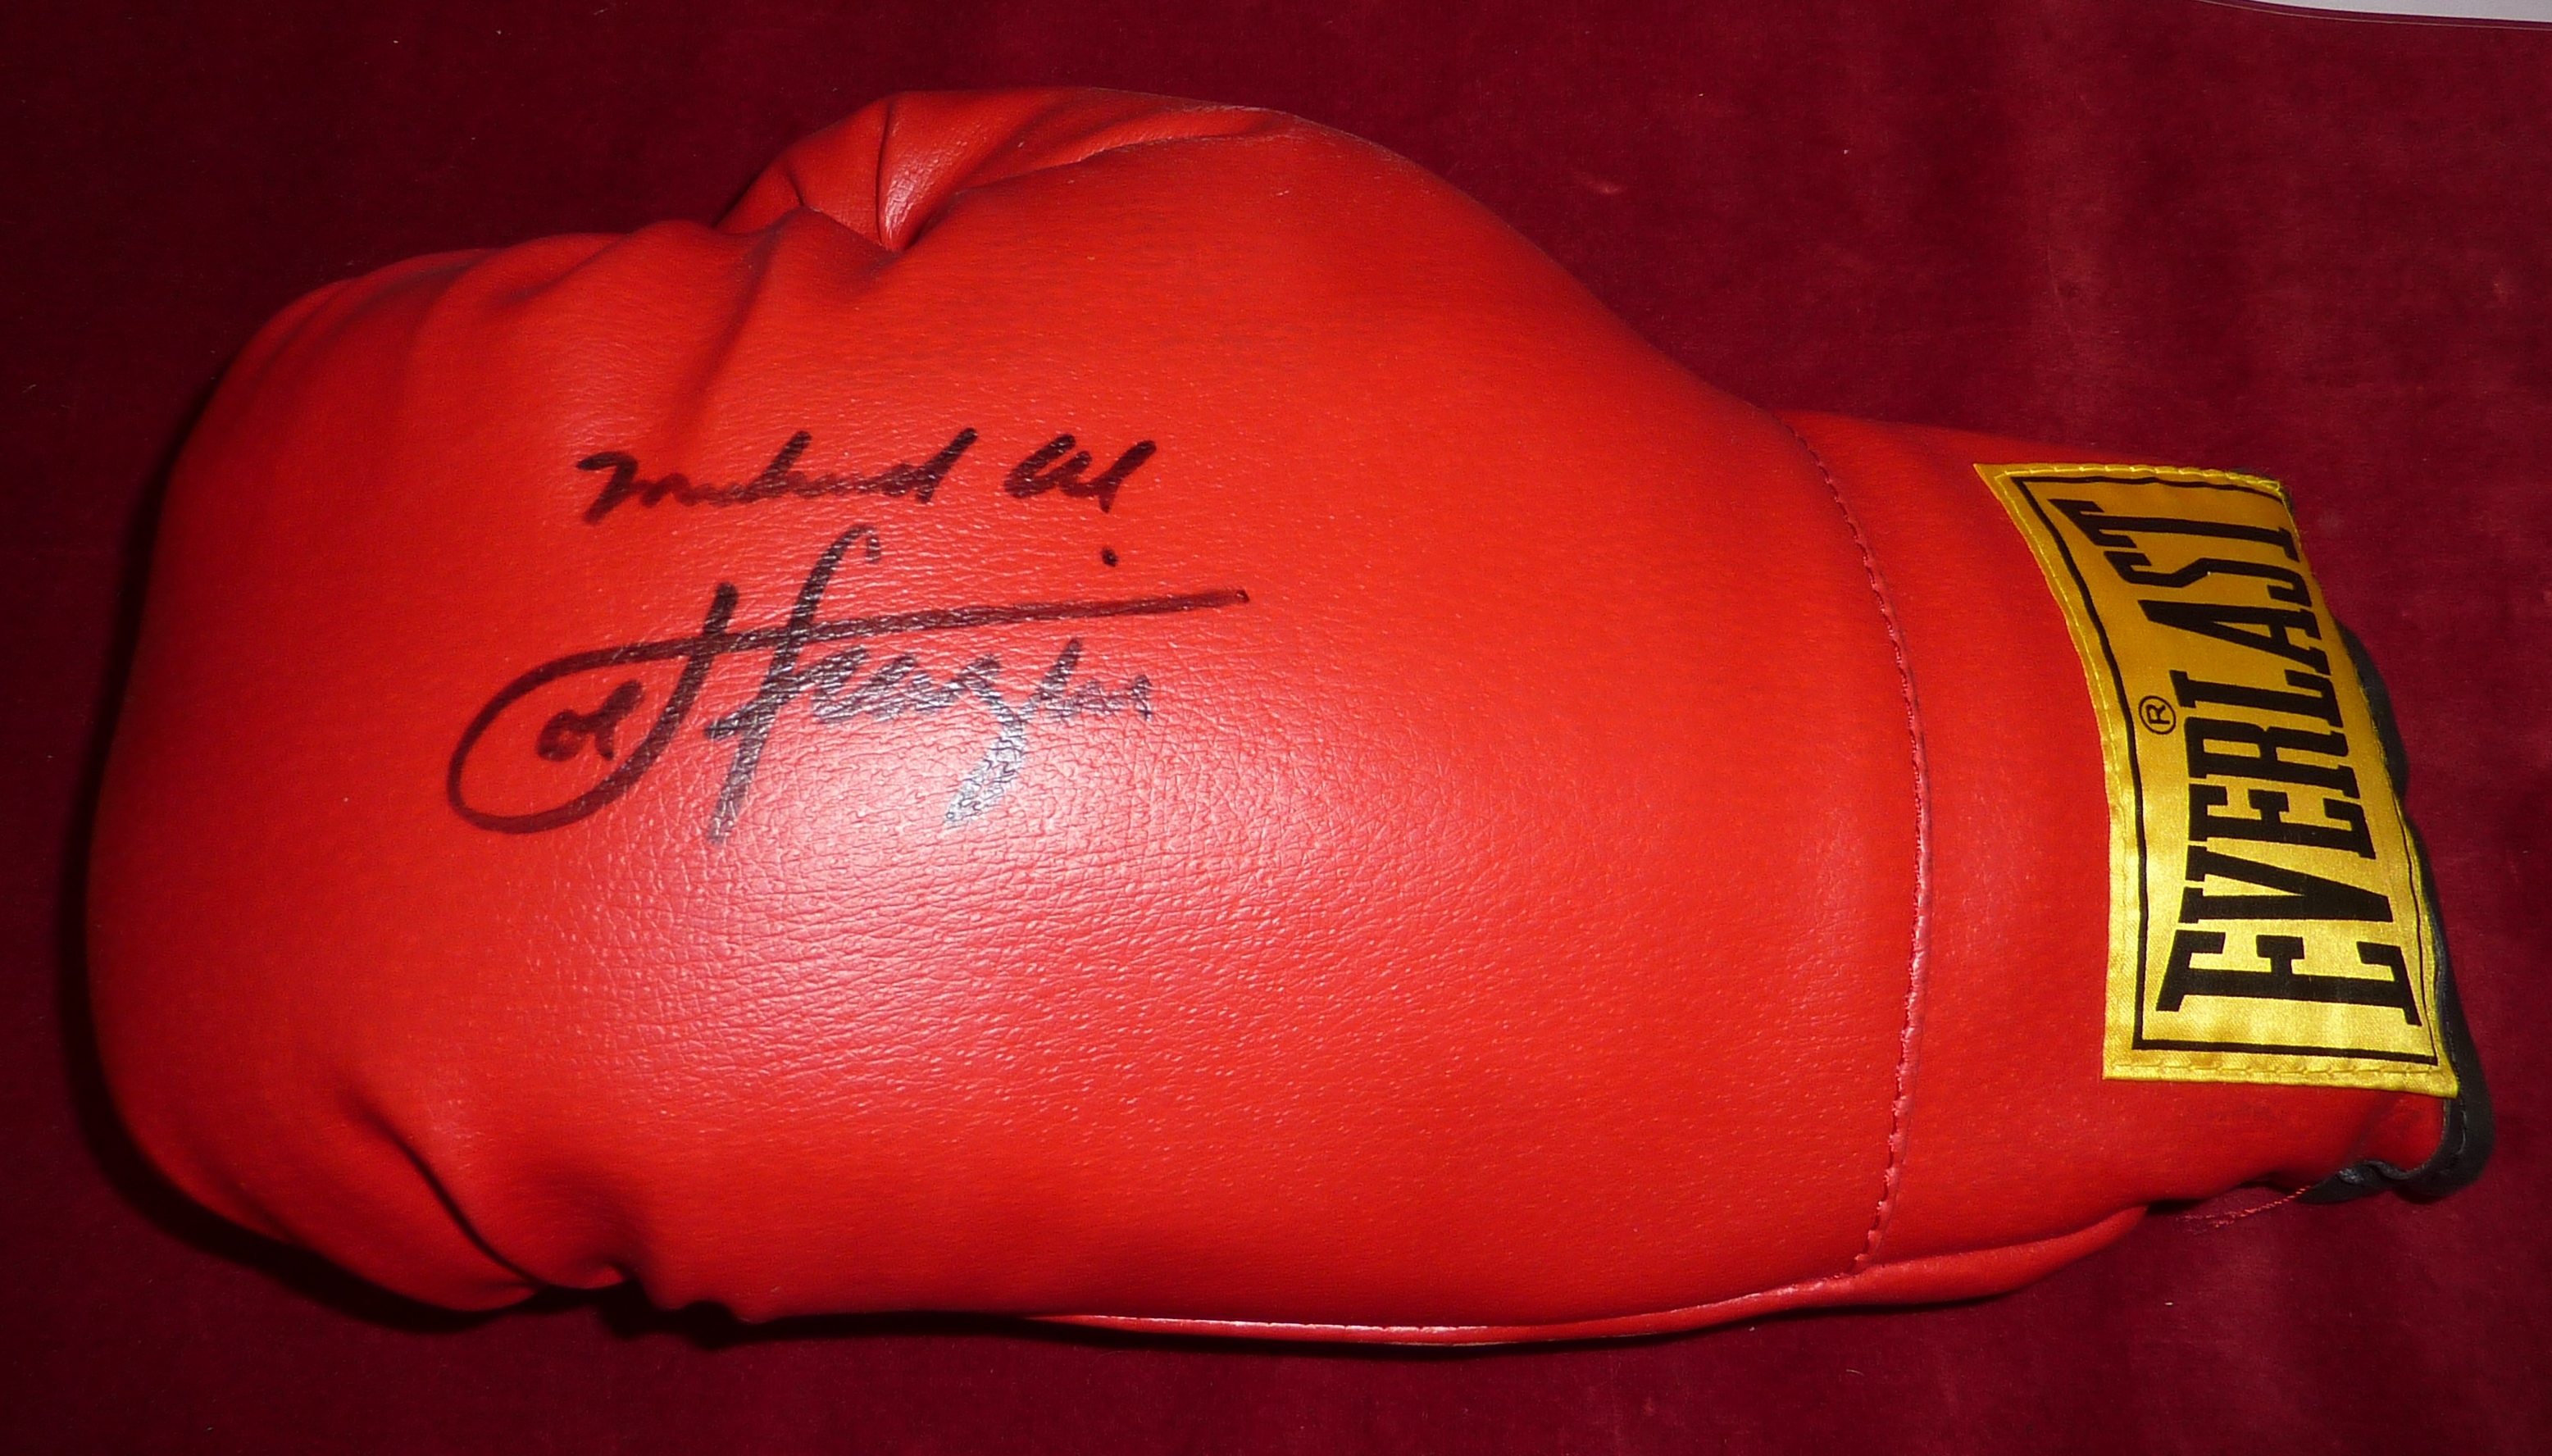 Signed Muhammed Ali and Joe Frazier Everlast boxing glove